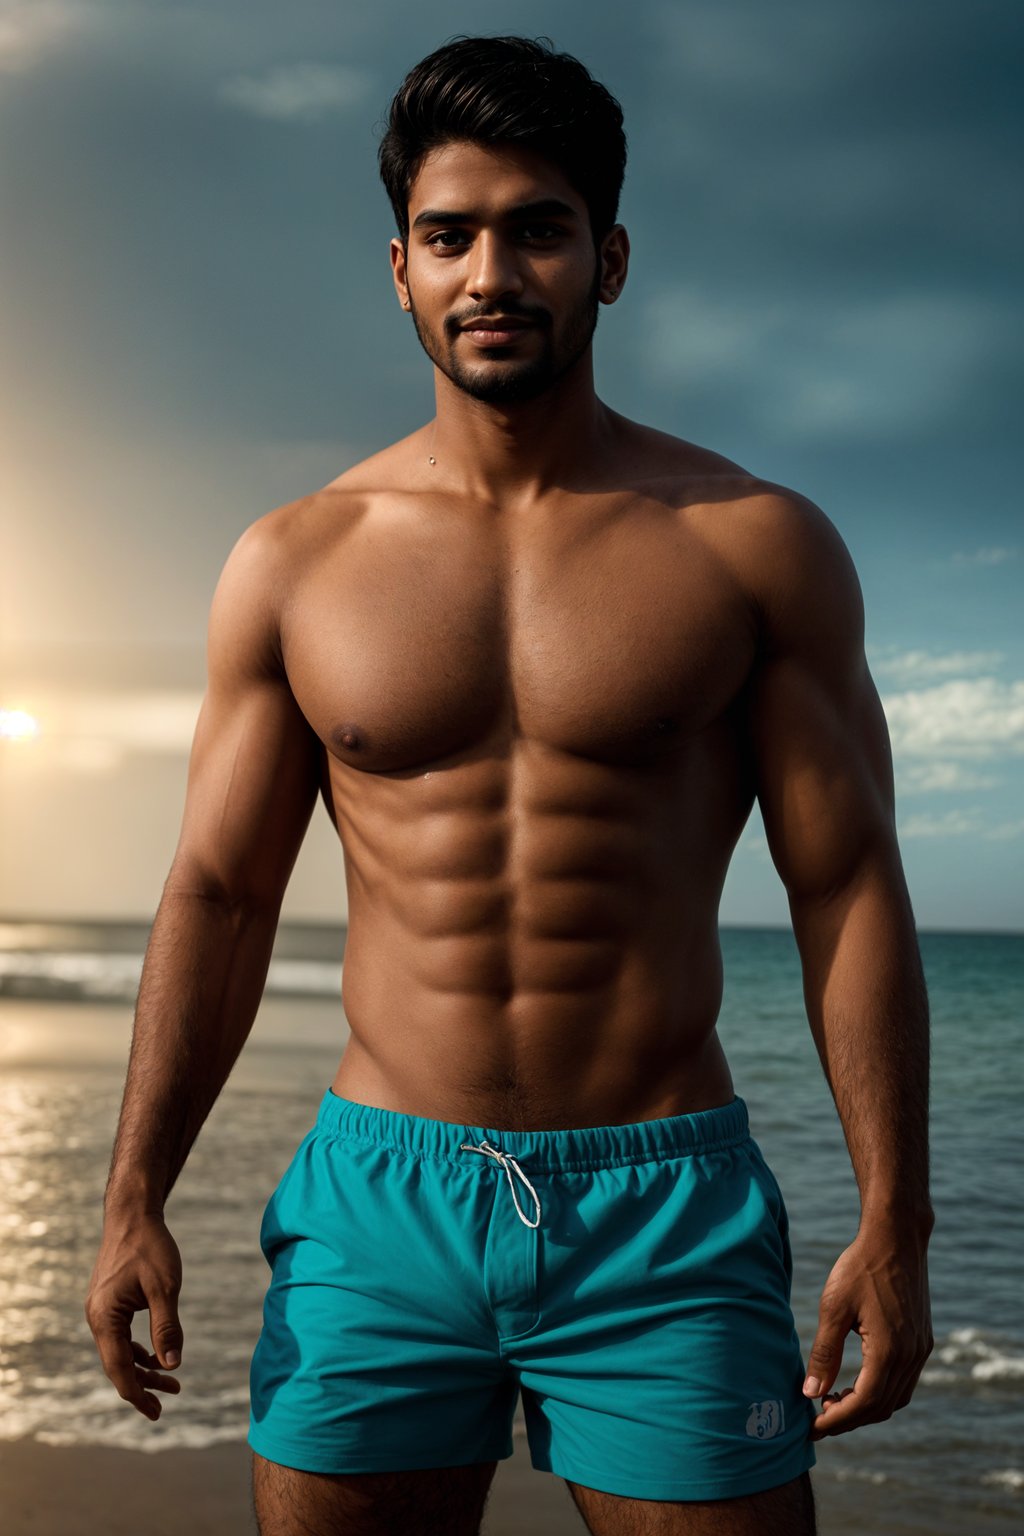 smiling man in  swim shorts on the beach, wet hair,   men's health fitness magazine photos